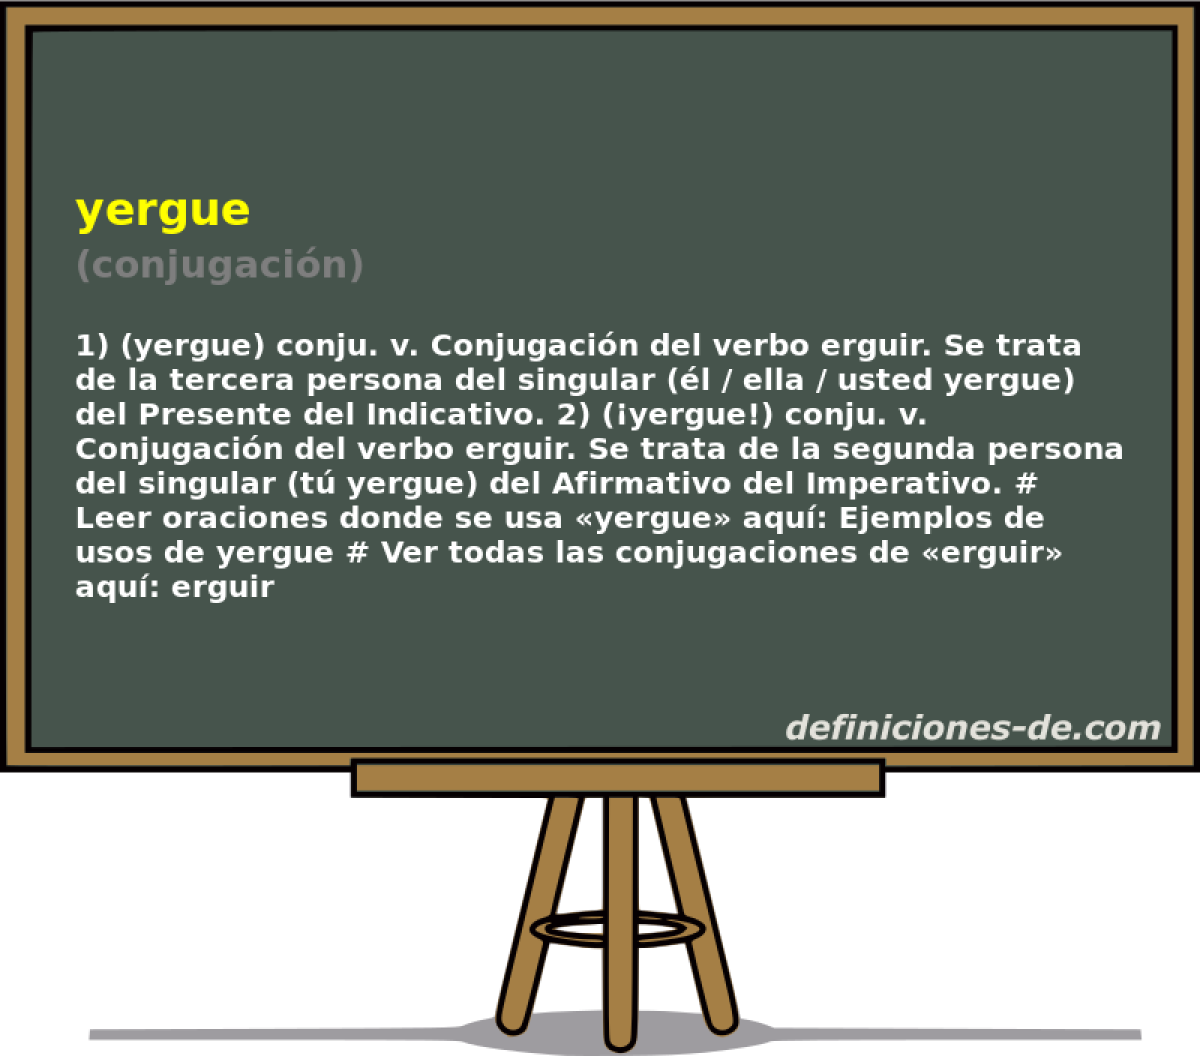 yergue (conjugacin)